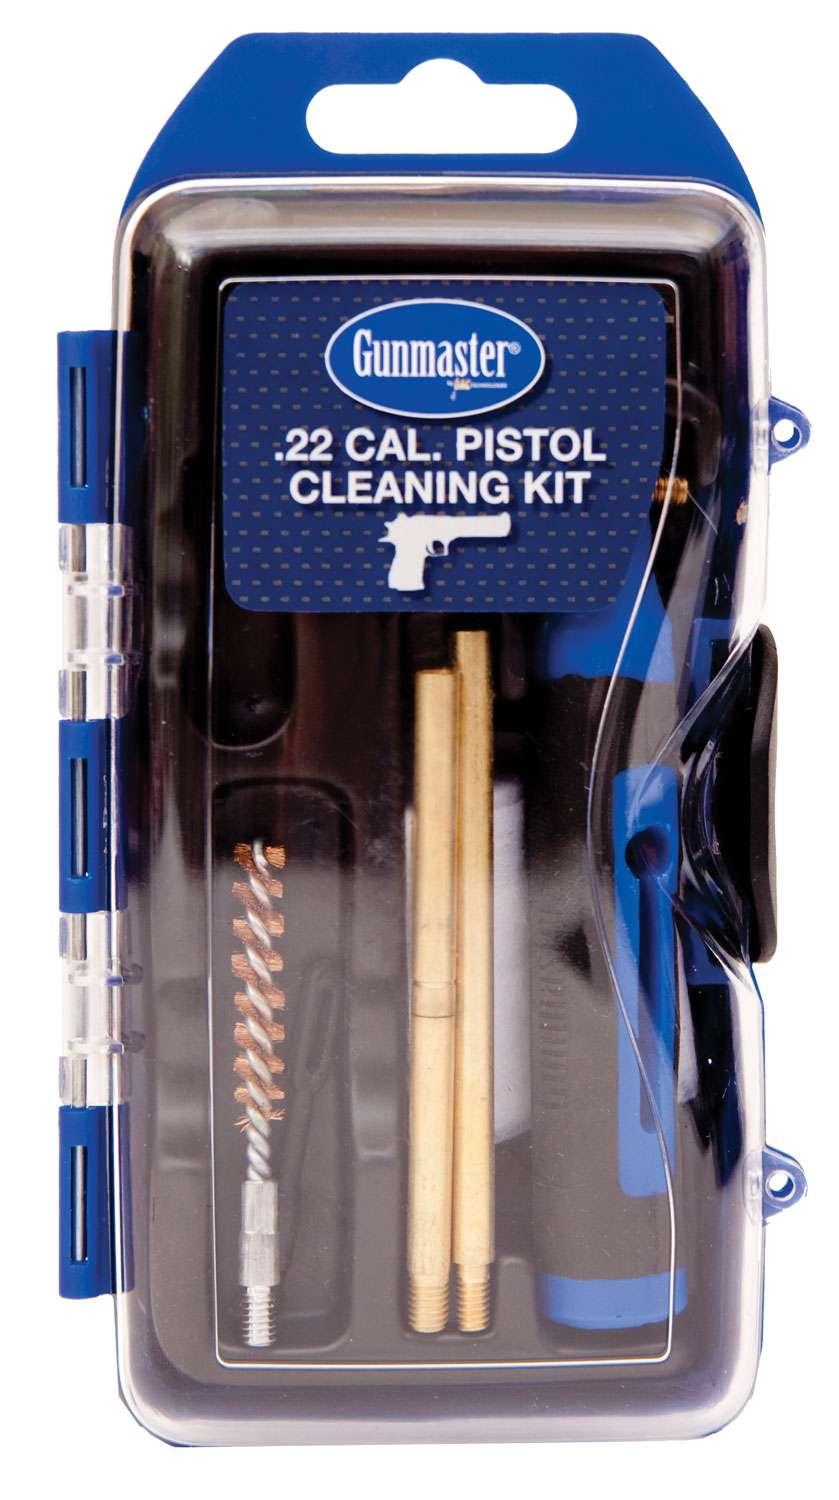  Dac Gm22p Gunmaster Cleaning Kit 22 Cal Pistol/14 Pieces Black/Blue